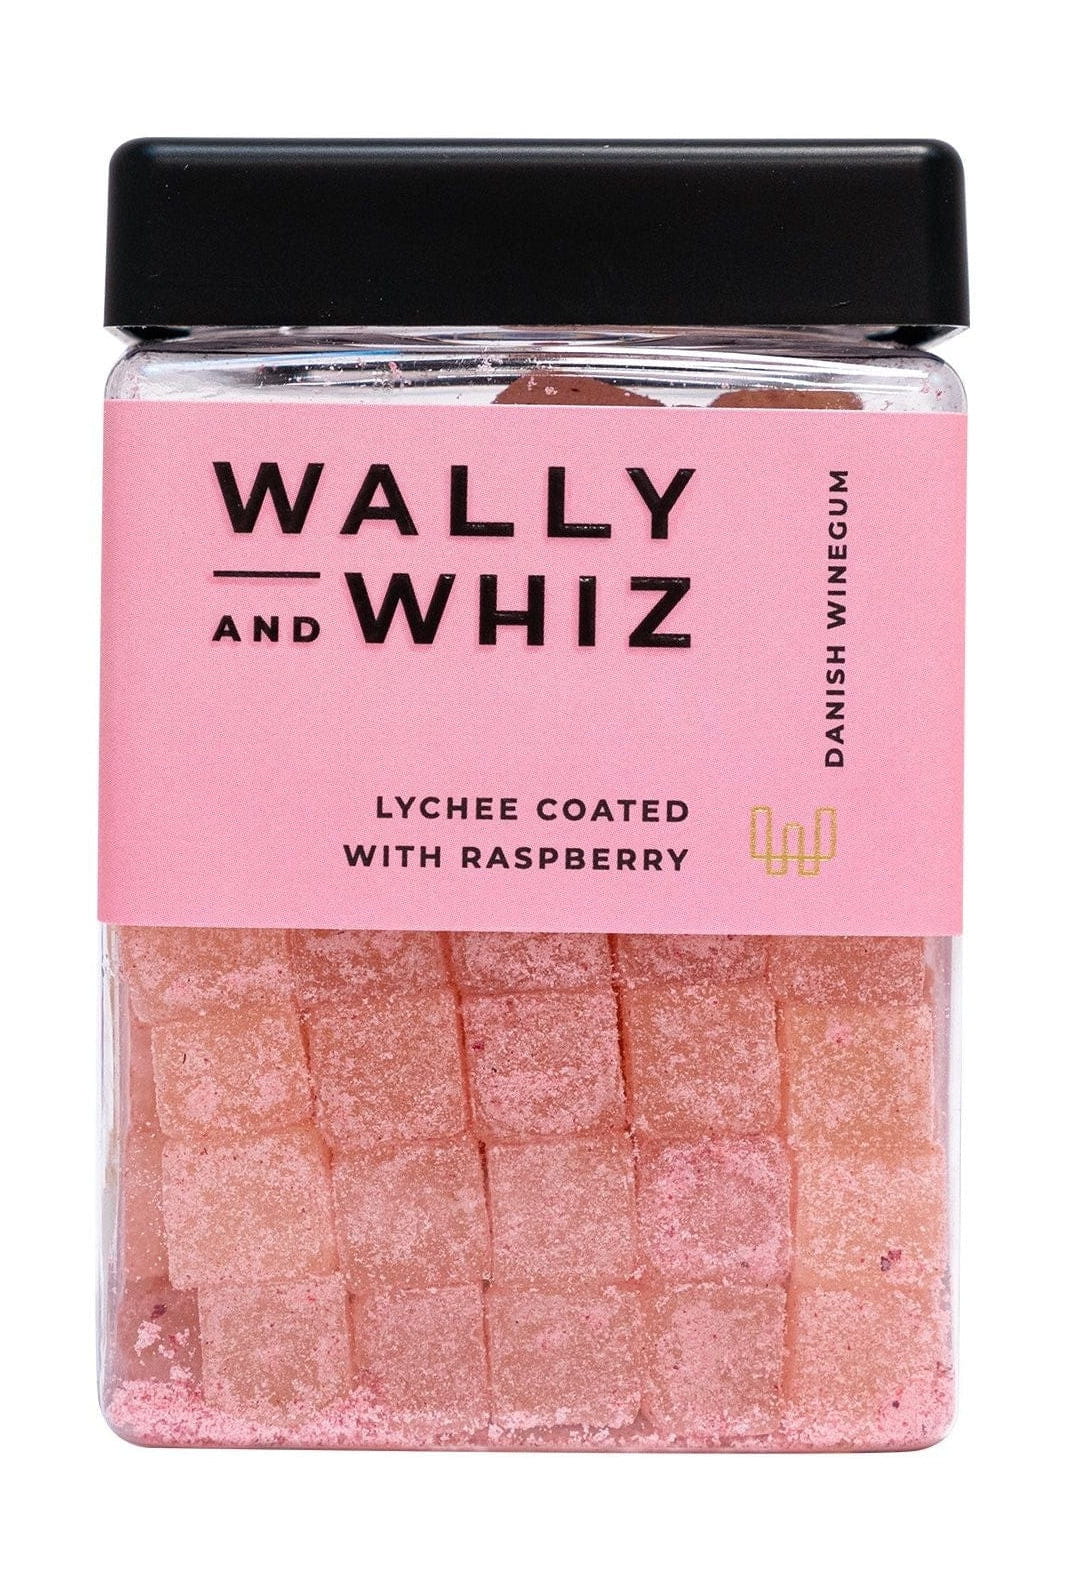 Wally And Whiz Vin gummi terning, lychee med hindbær, 240 g